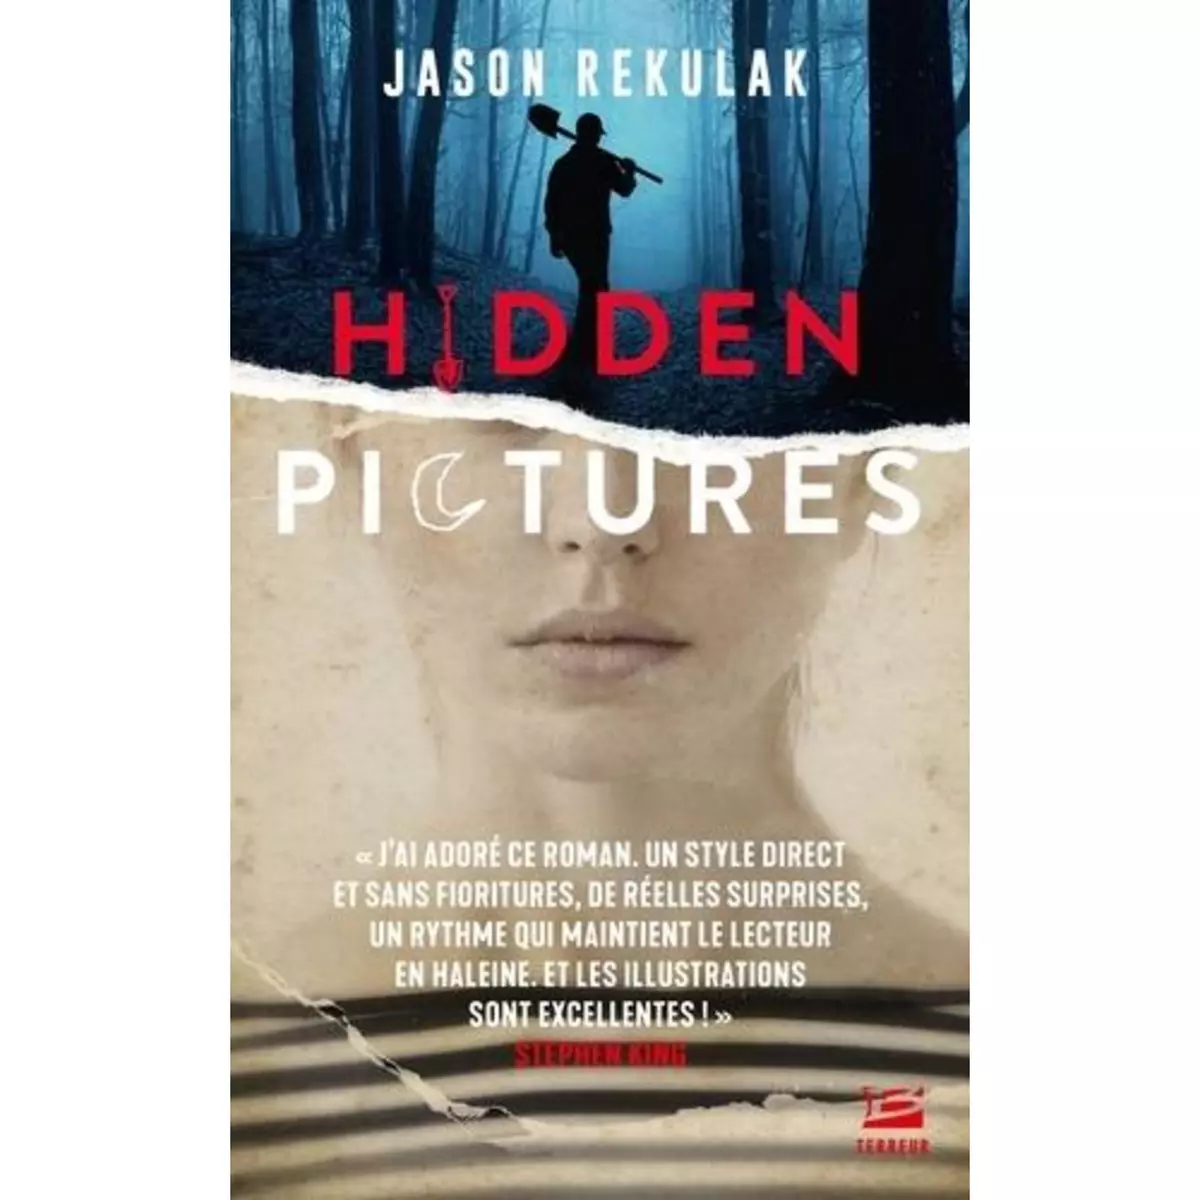  HIDDEN PICTURES, Rekulak Jason